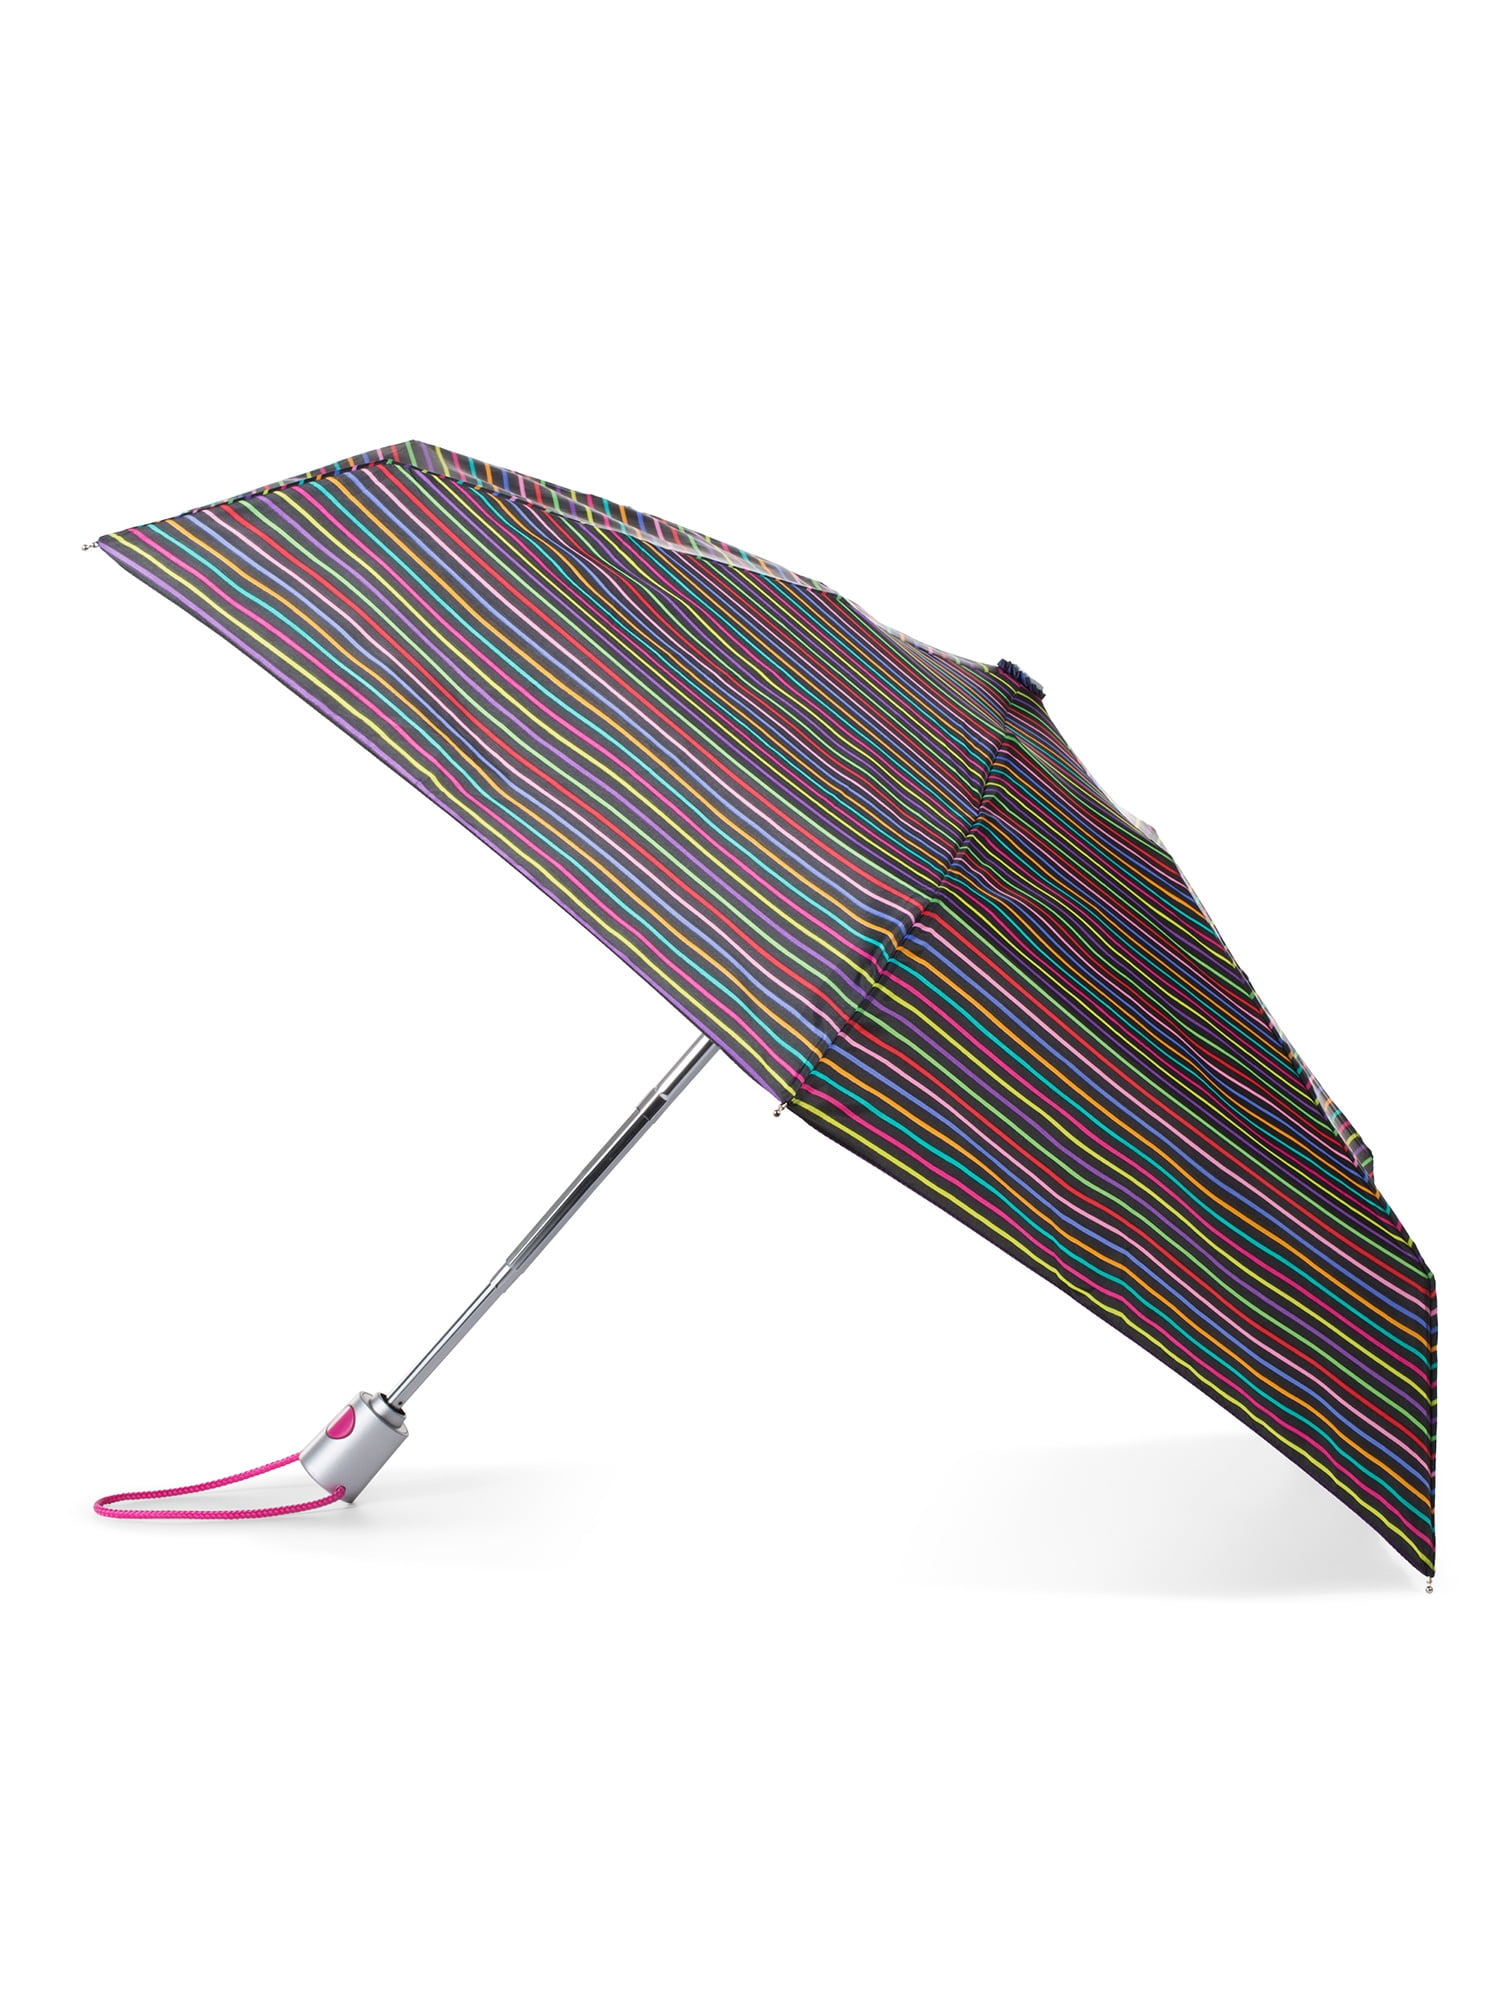 Oregon State Flag Compact Foldable Rainproof Windproof Travel Umbrella 